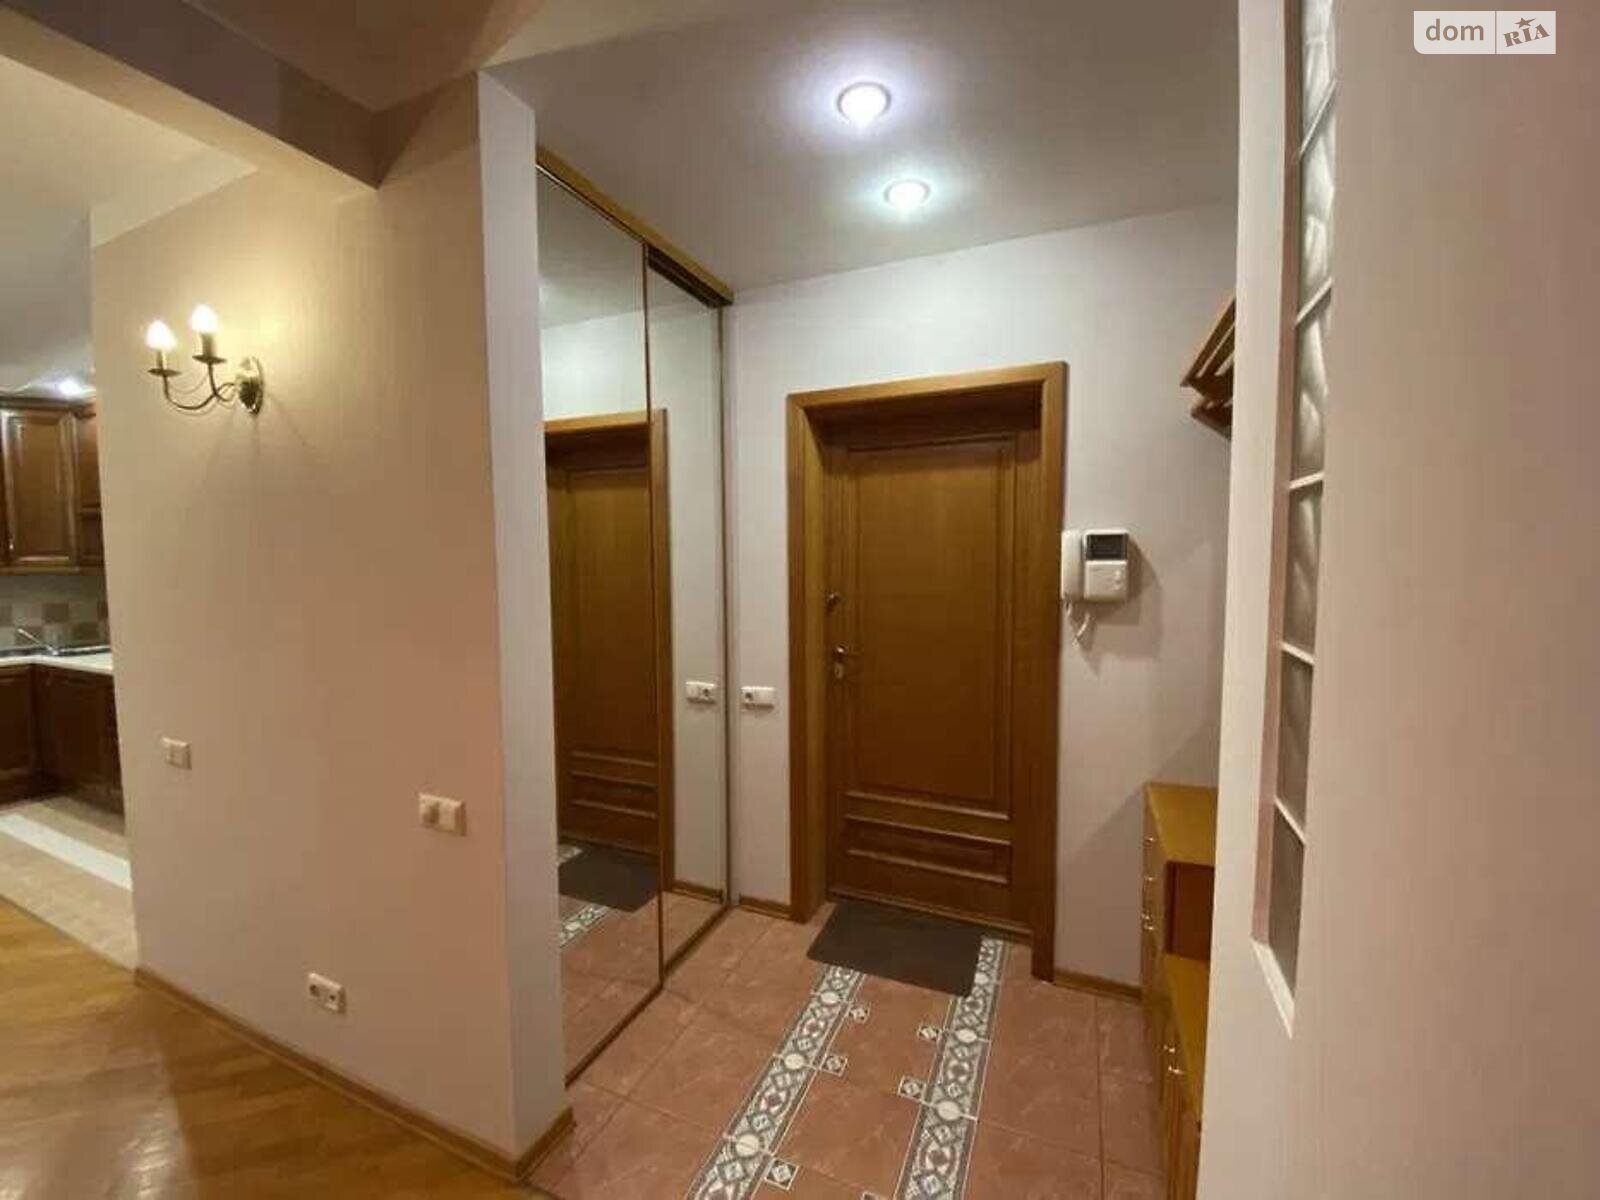 Продажа трехкомнатной квартиры в Киеве, на ул. Мокрая 3, район Соломянка фото 1